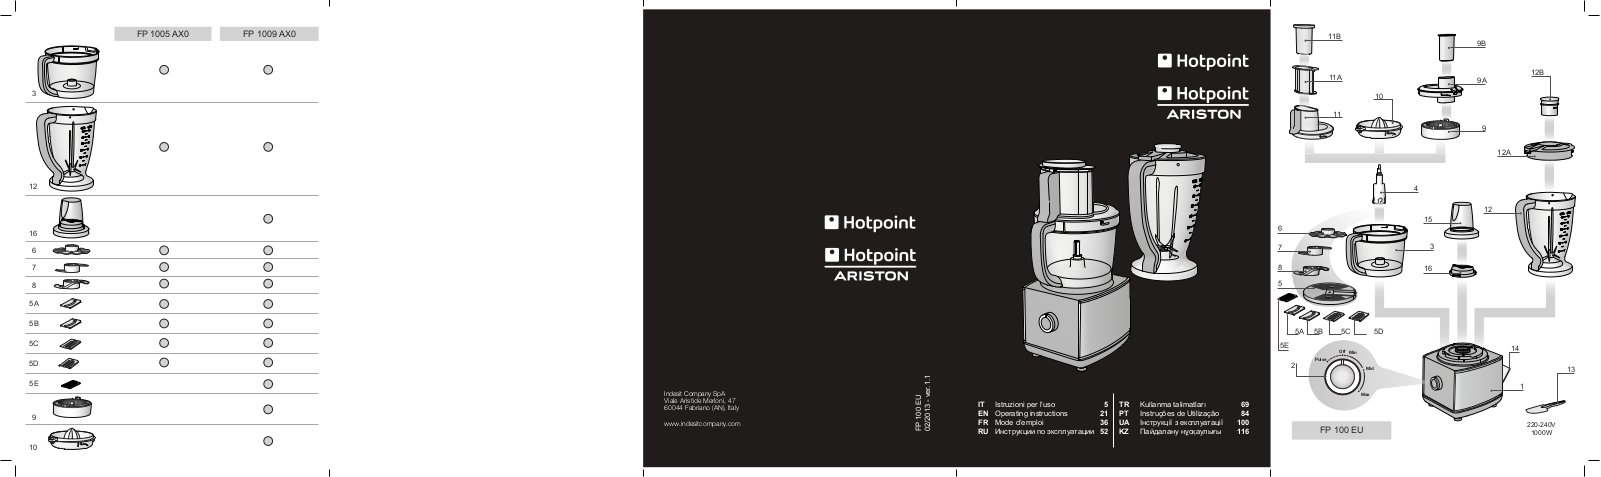 Hotpoint-ariston FP 1009 AX0 User Manual